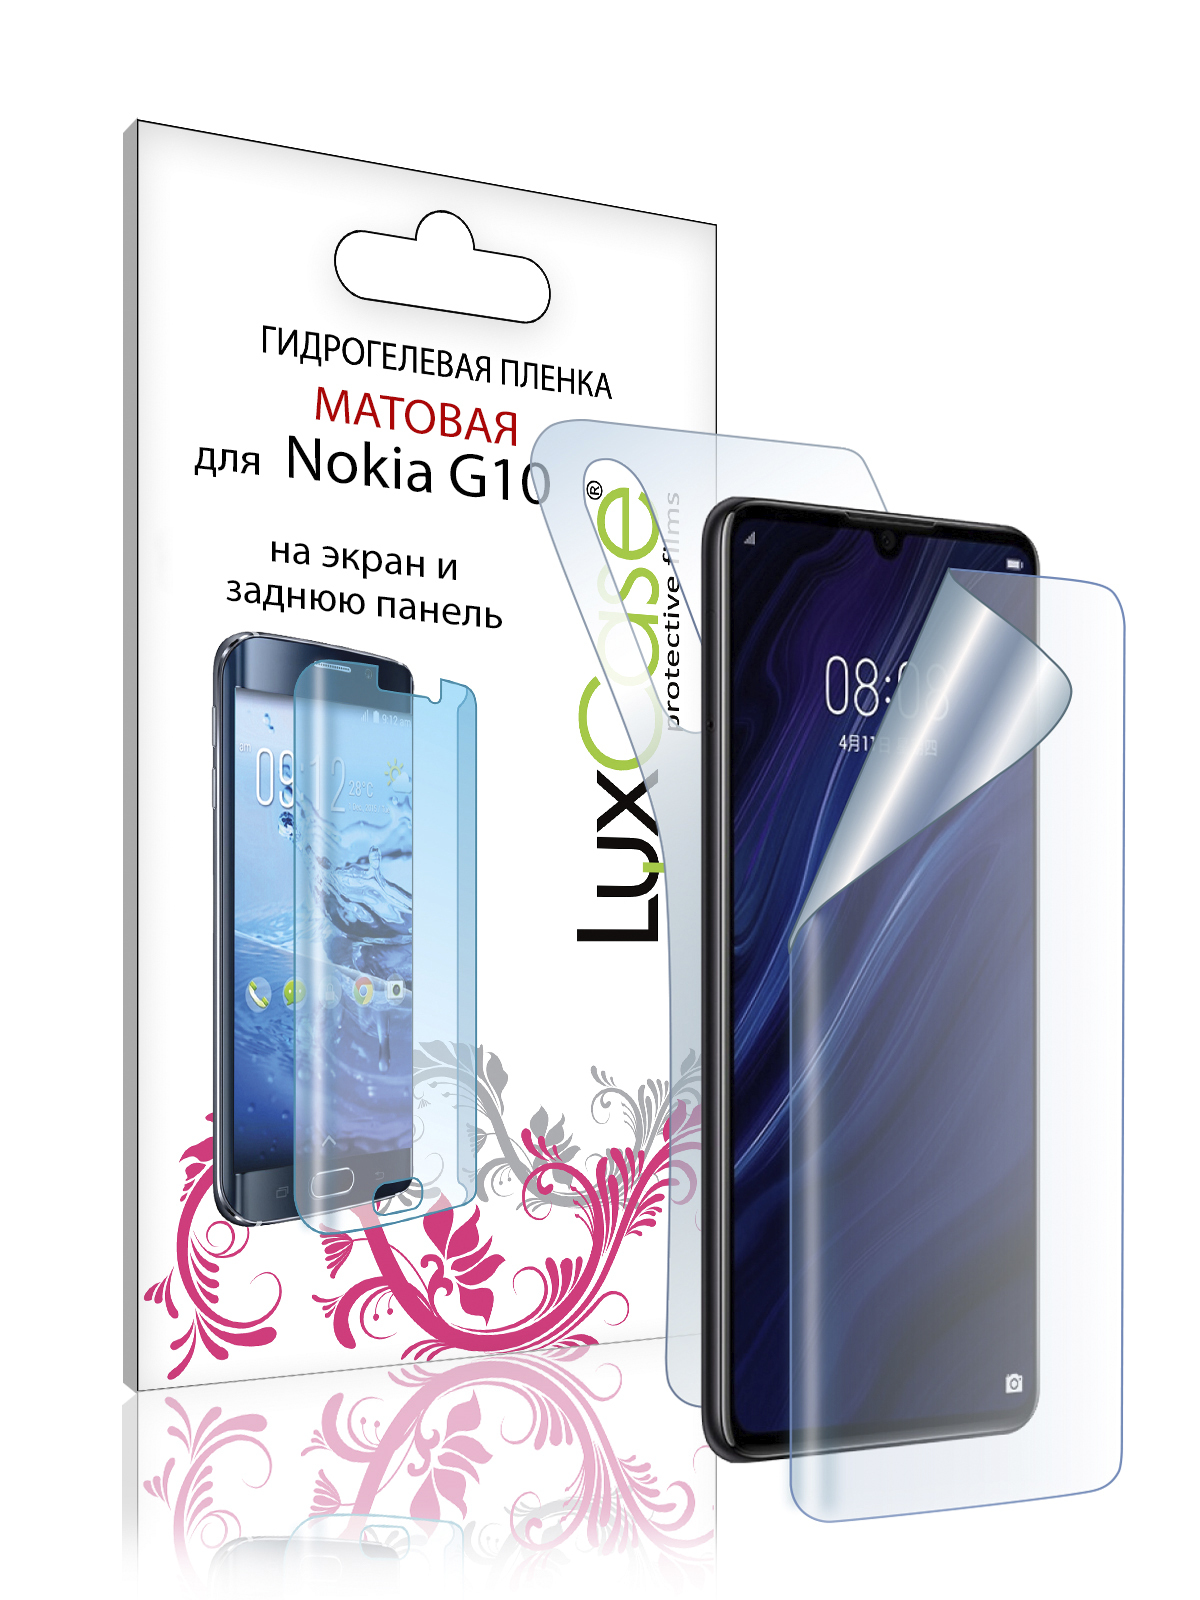 Пленка гидрогелевая LuxCase для Nokia G20 0.14mm Front and Back Matte 86458 гидрогелевая пленка luxcase для nokia g20 0 14mm back matte 86457